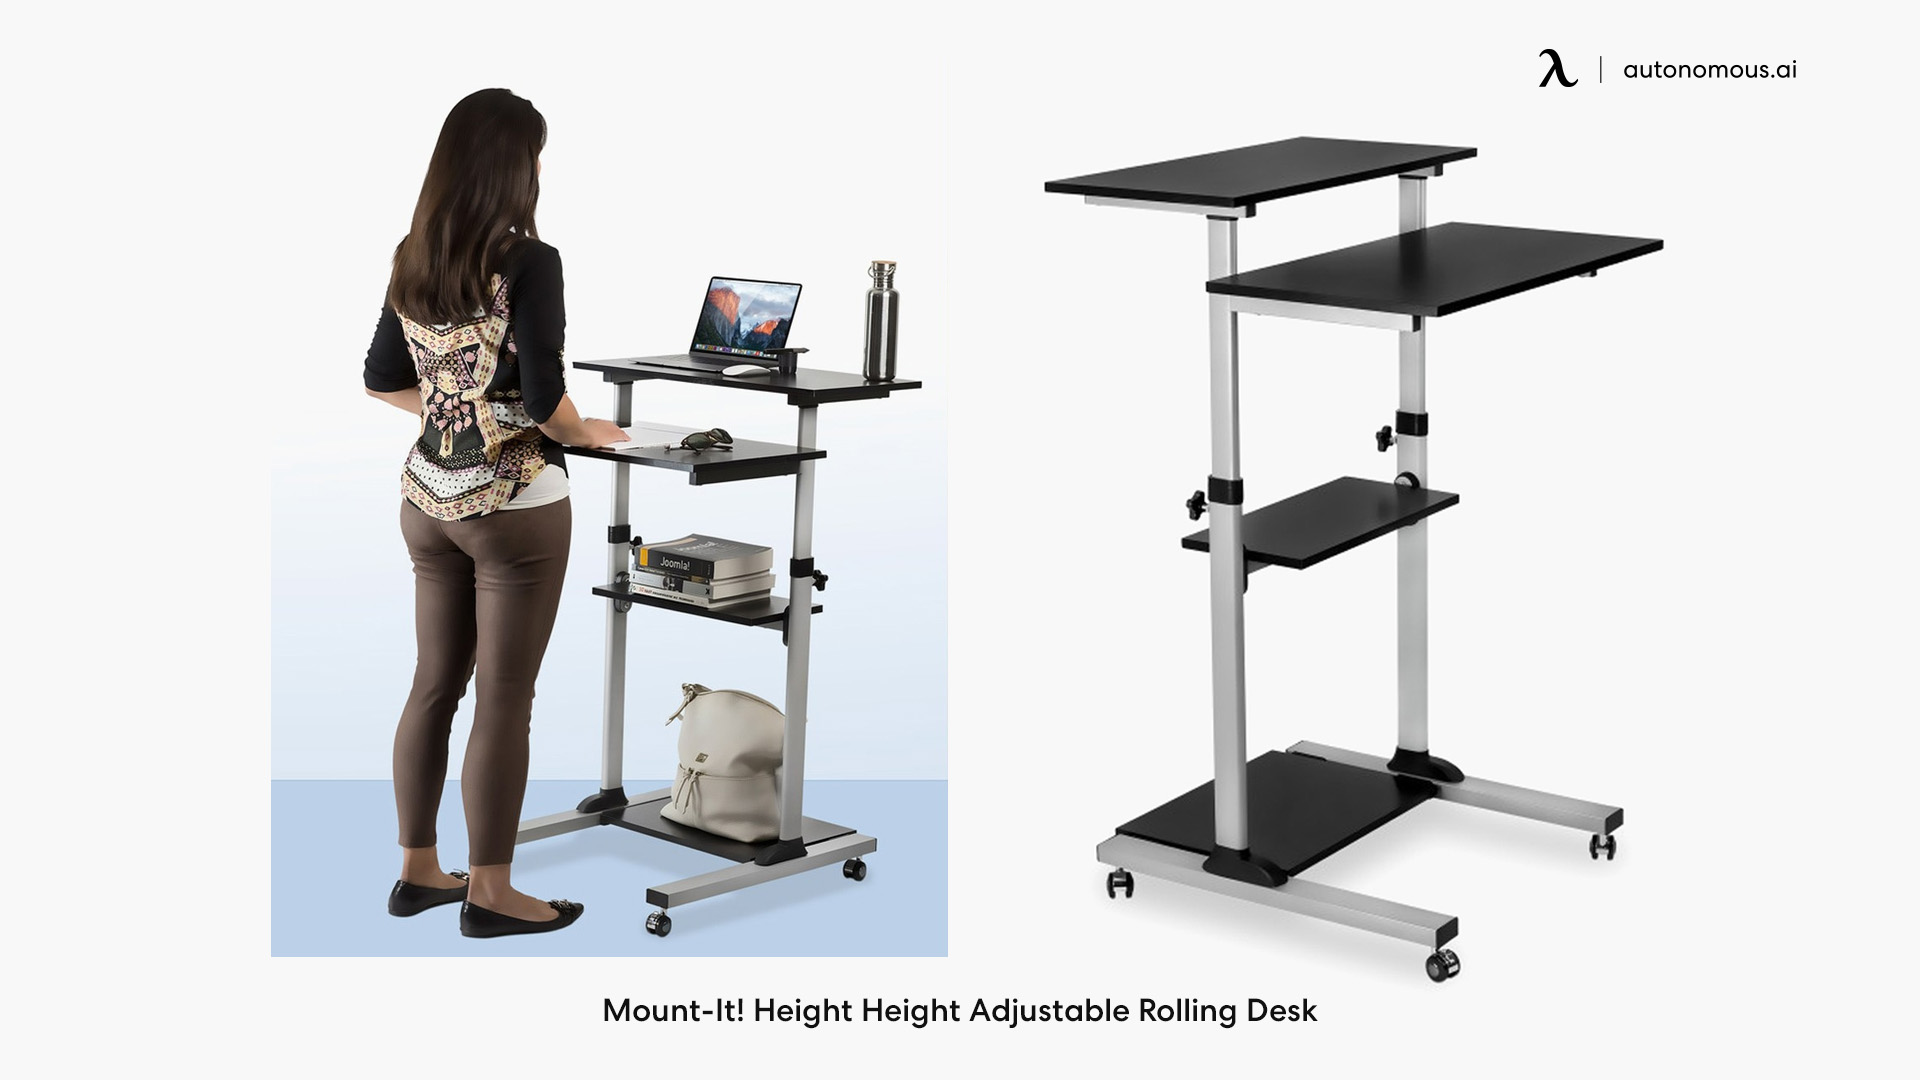 Mount-It! Height Height Adjustable Rolling Desk